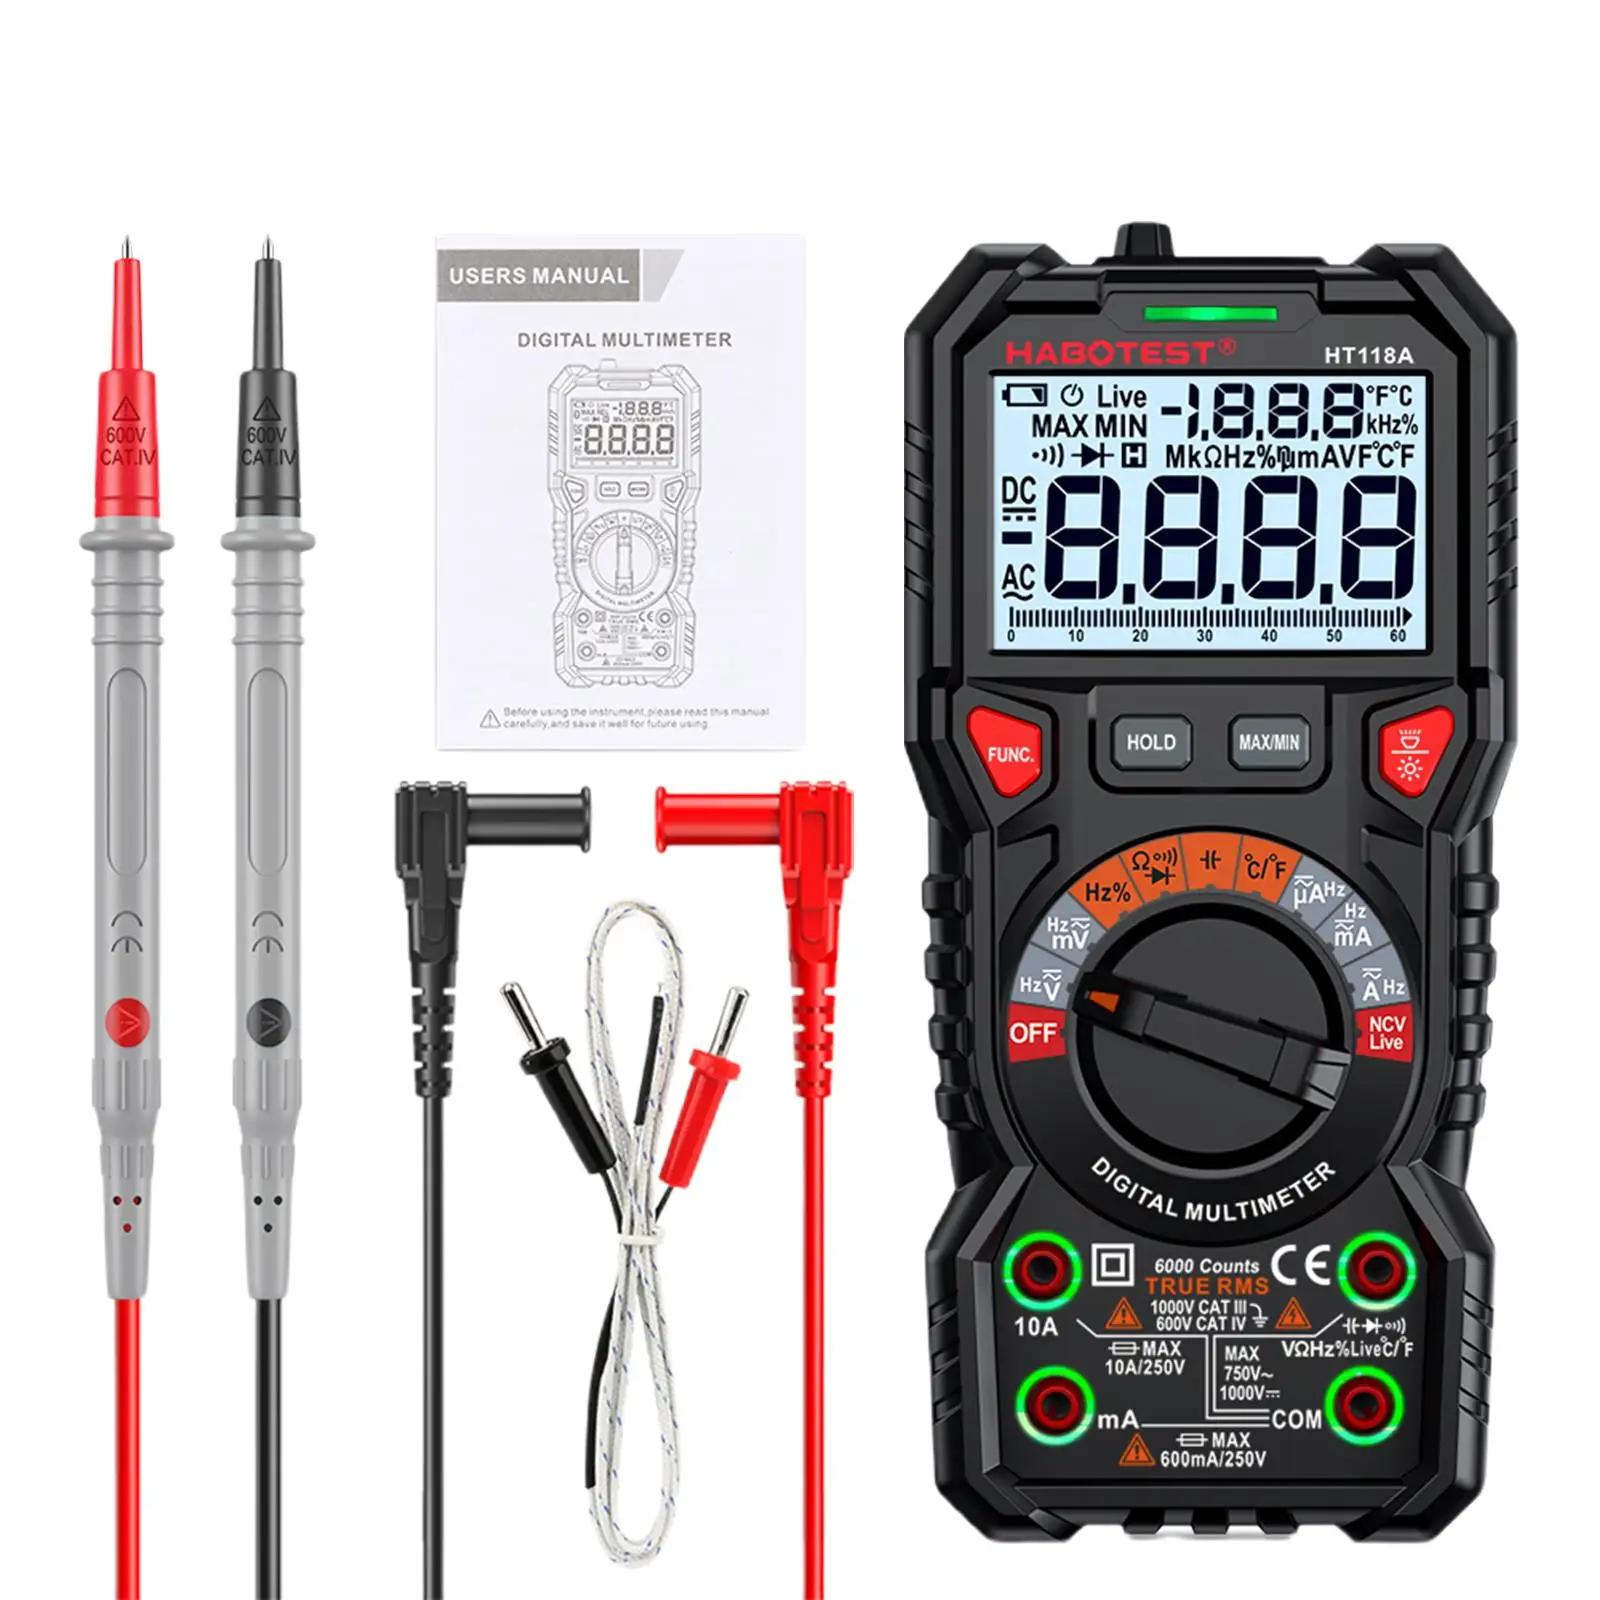 Digital Tester Automatic Measurement Meter Handheld Digital Meter for Household